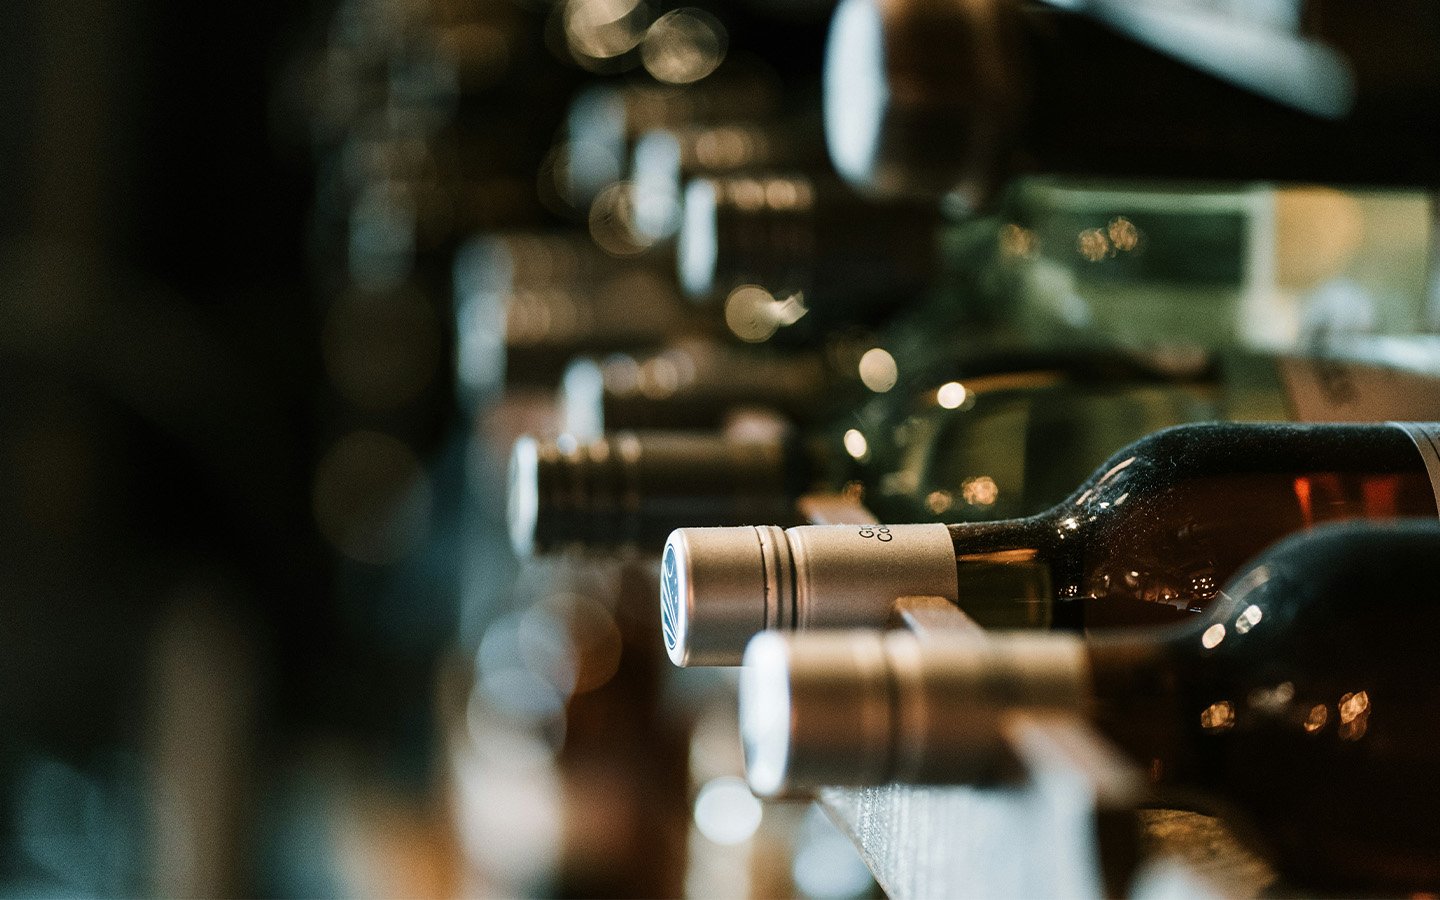 SJM restaurants earn top honours in Wine Spectator awards